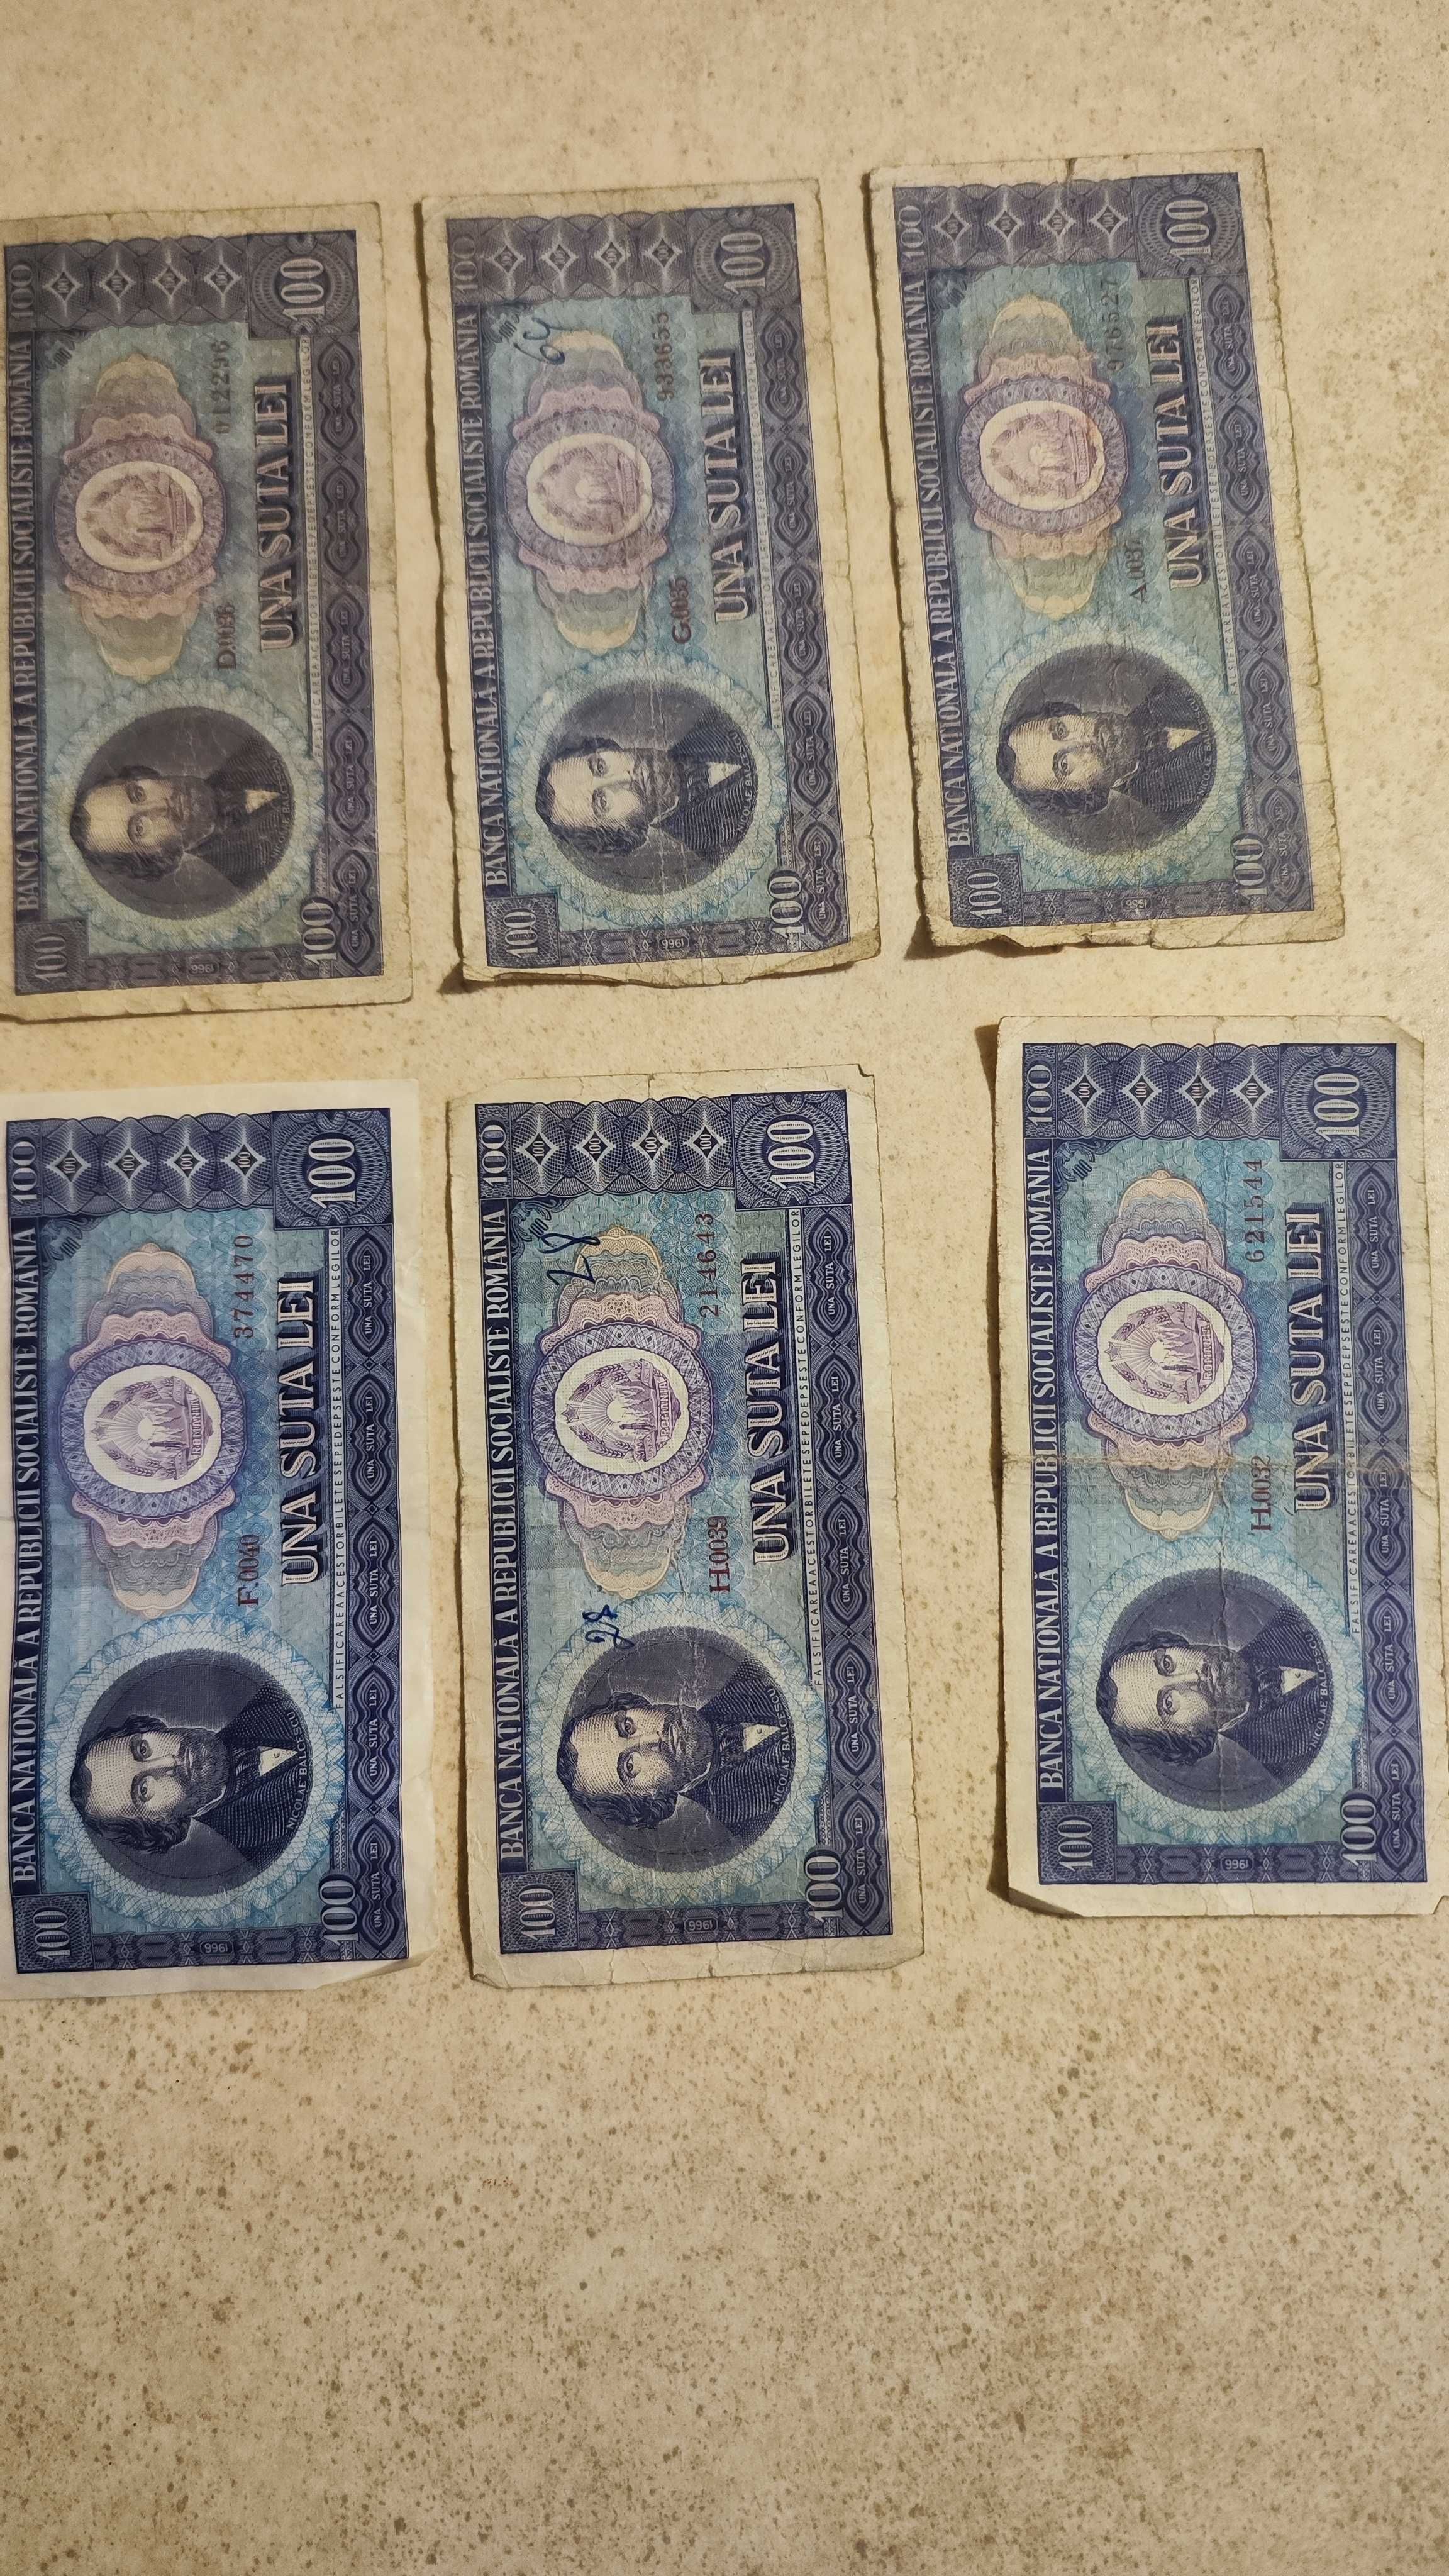 Bancnote vechi de 100 lei din 1966 Nicolae Balcescu